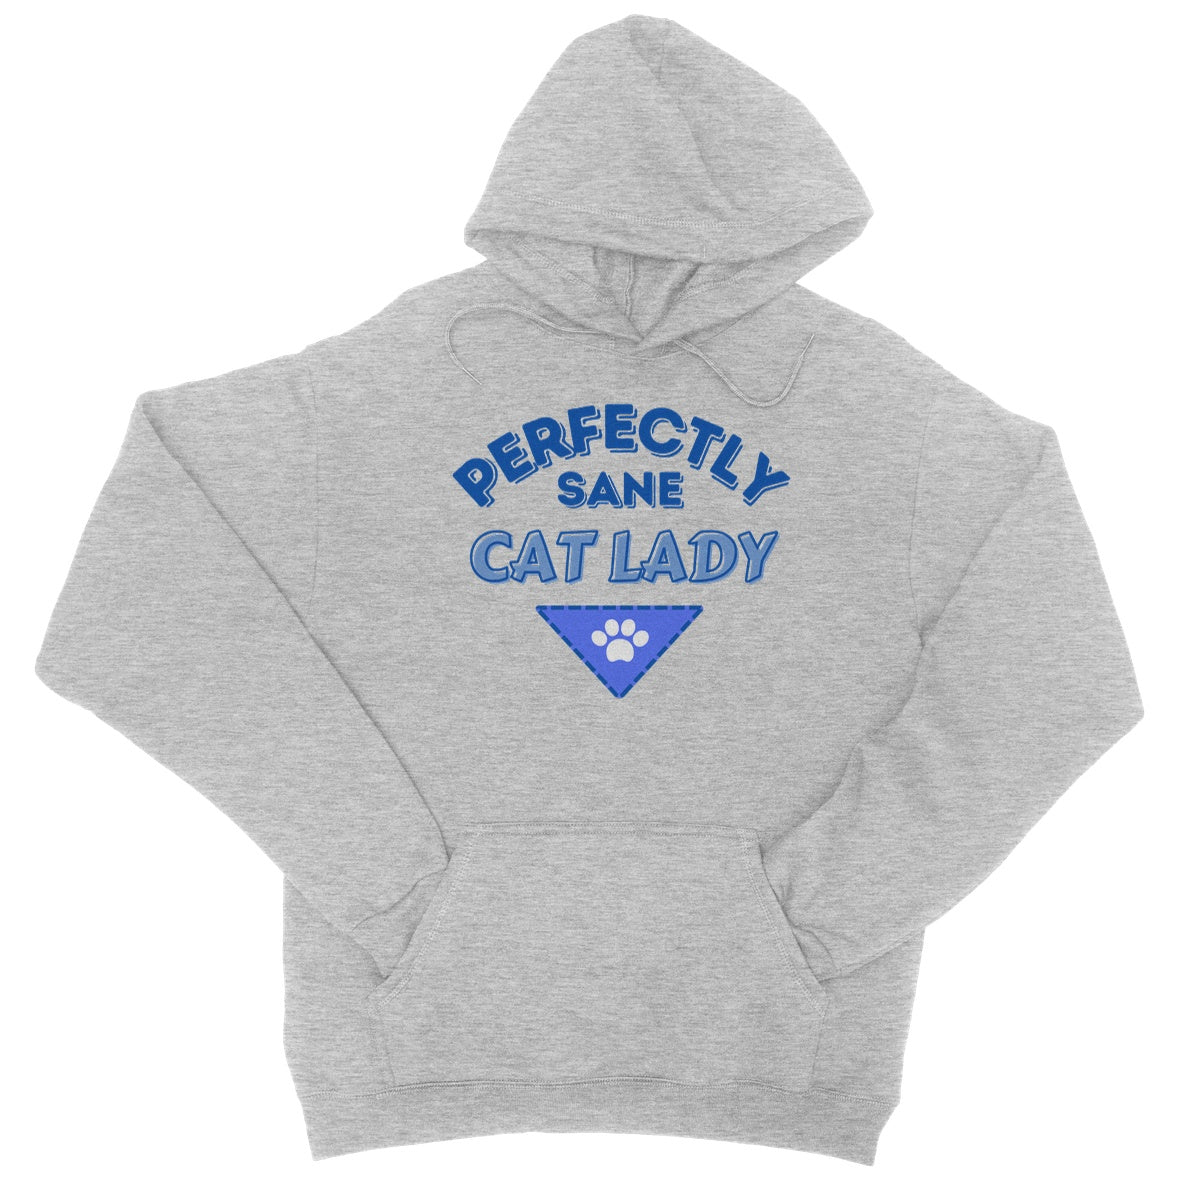 perfectly sane cat lady hoodie light grey